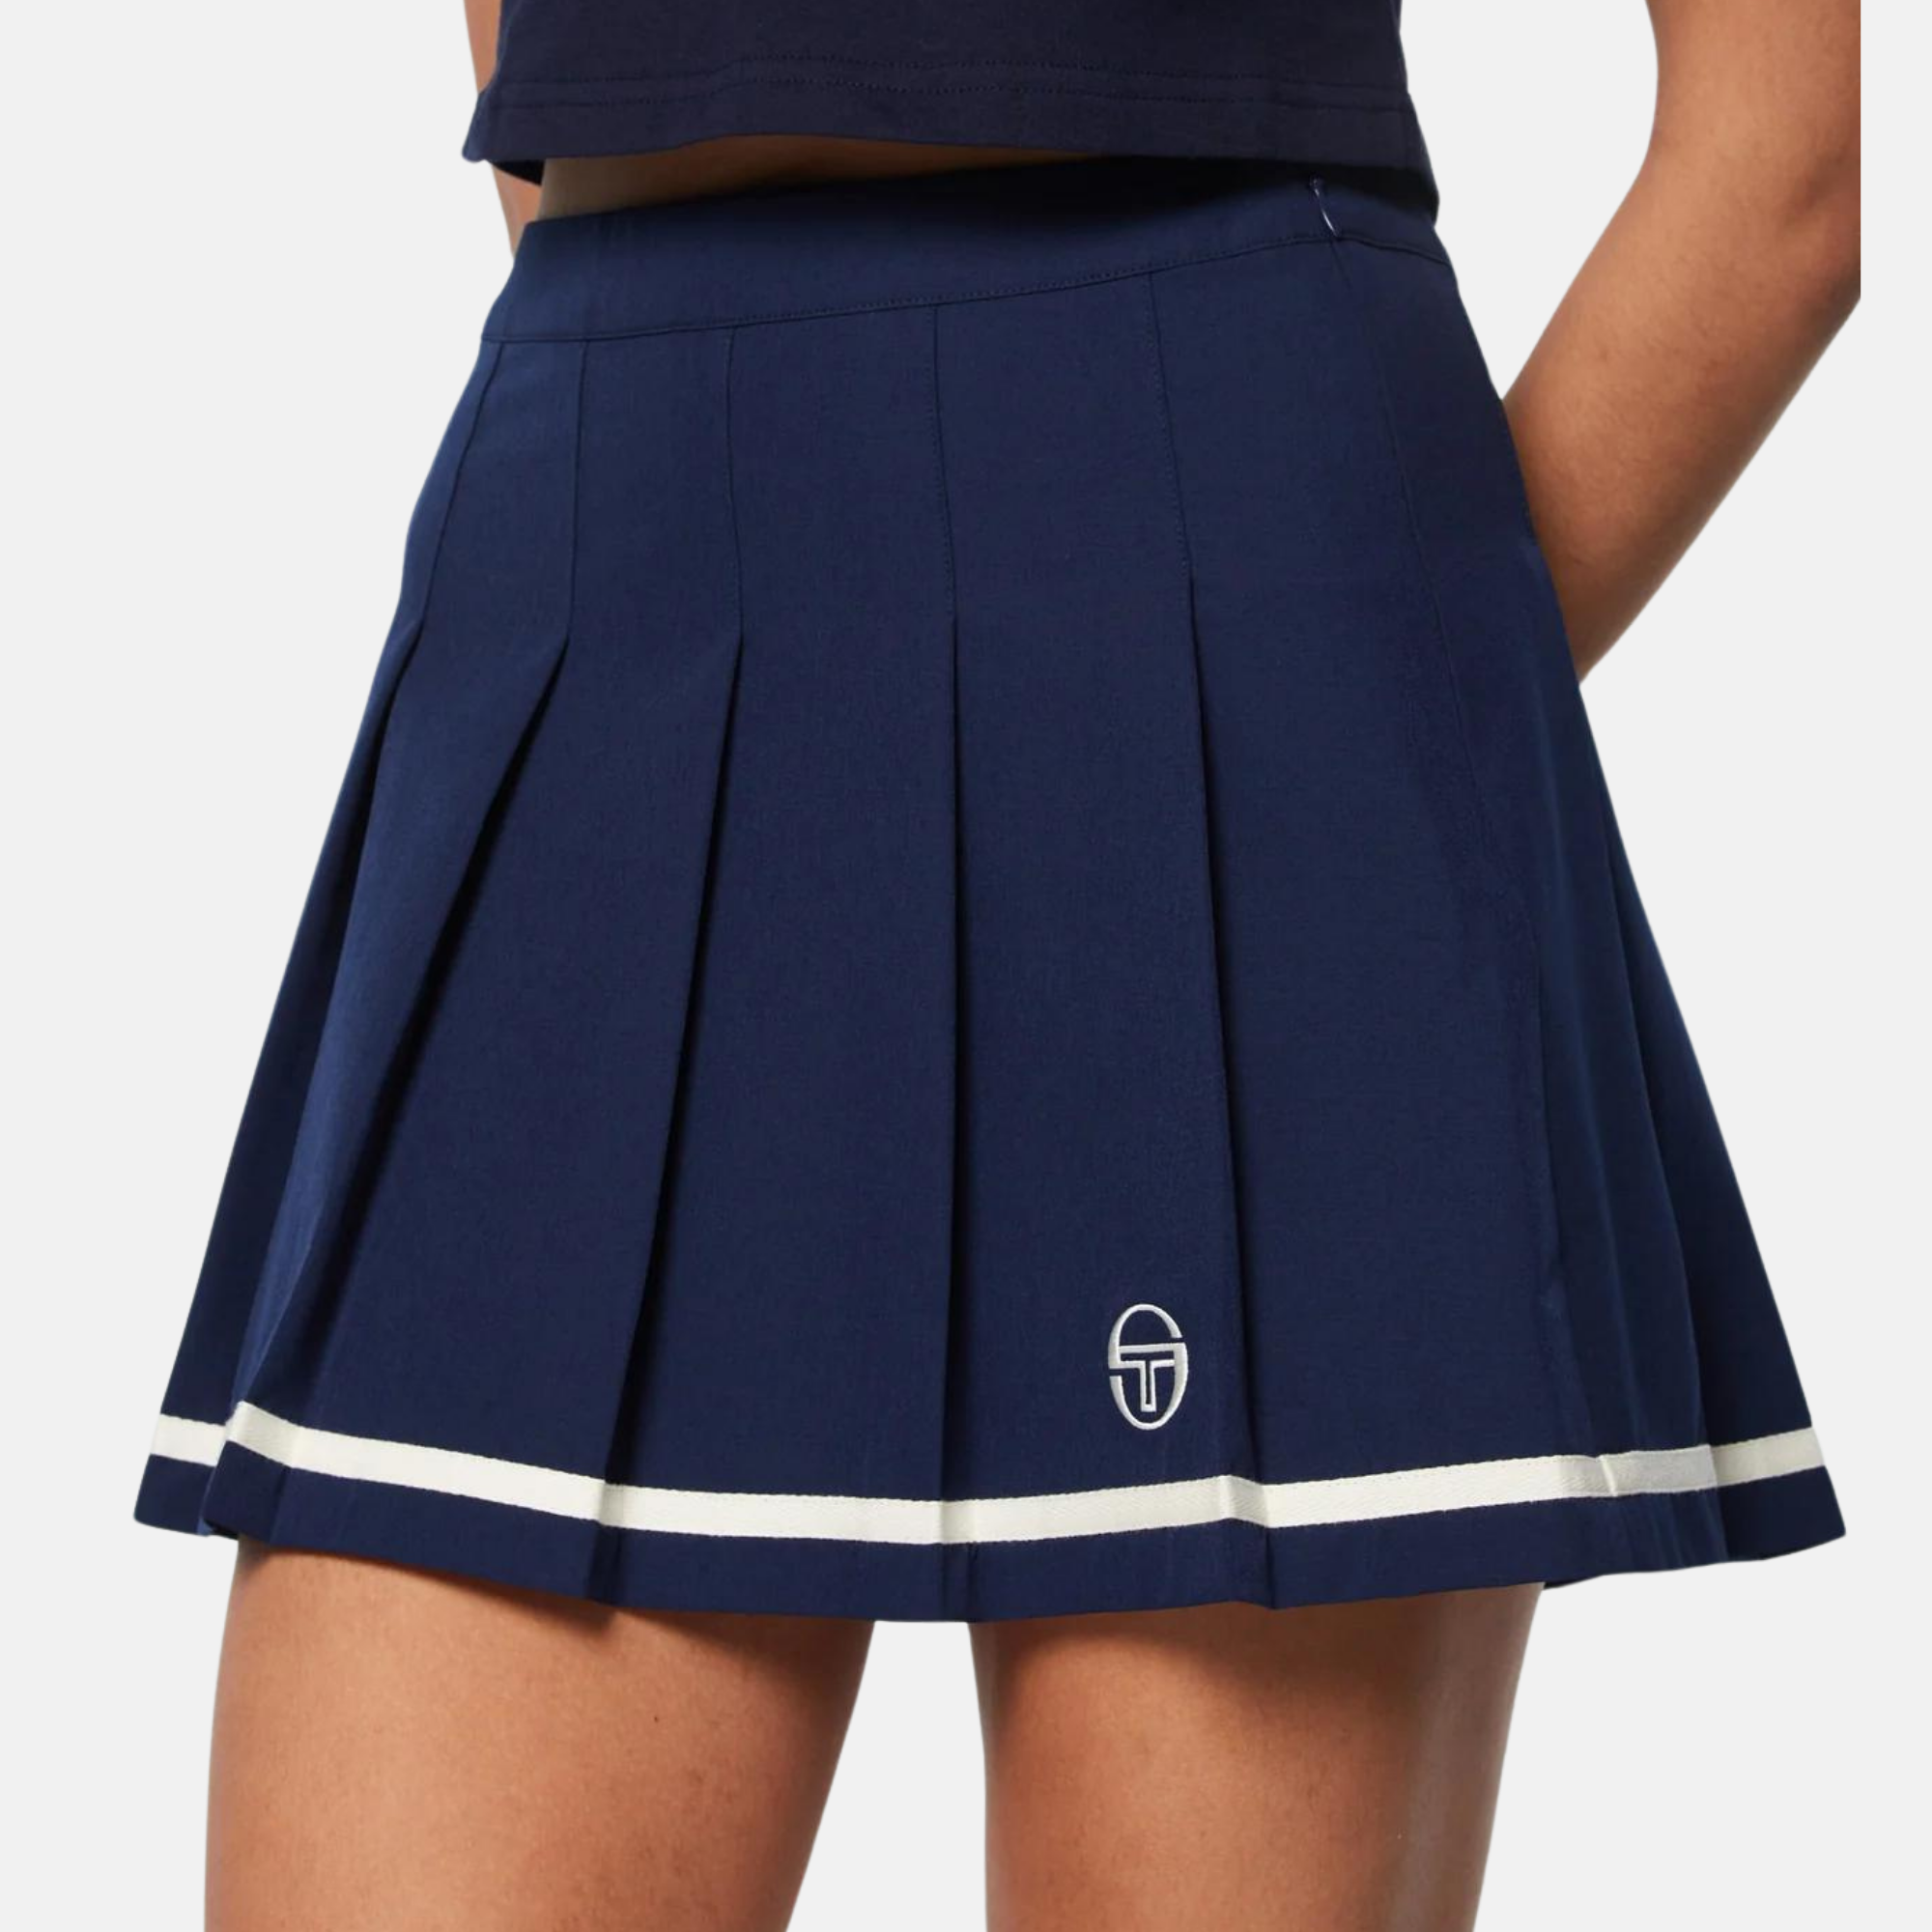 Sergio Tacchini Women's Maritime Blue Kalkman Tennis Skirt